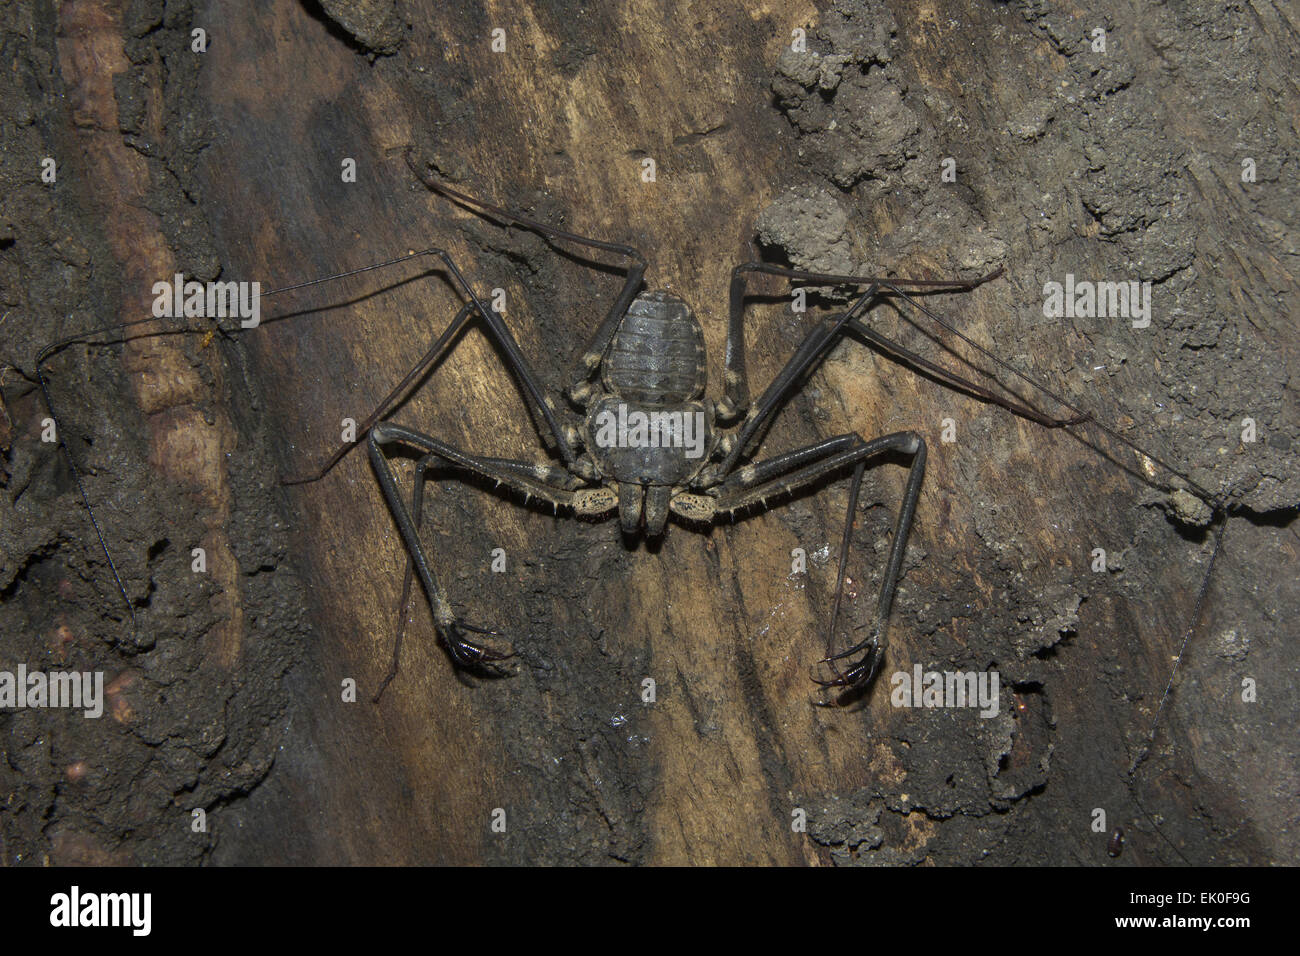 Tailless whip scorpions, Amblypygi sp, Phrynichidae, Neyyar wildlife sanctuary, Kerala. India Stock Photo